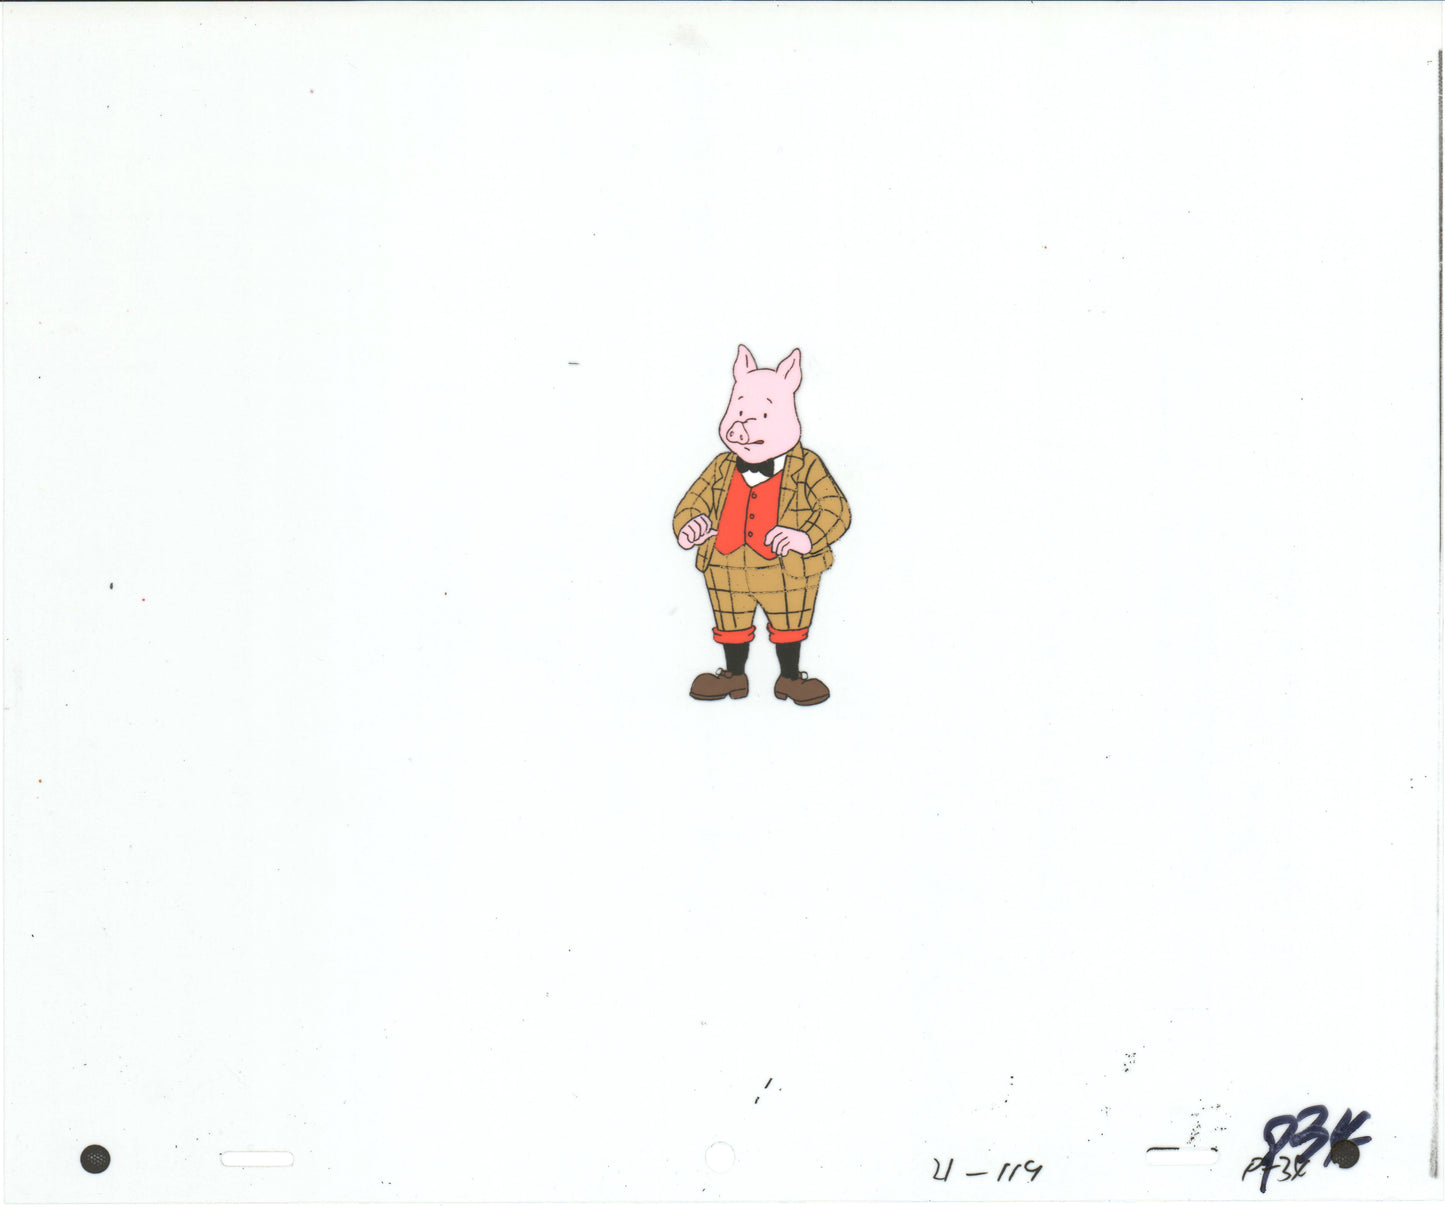 RUPERT Bear Podgy Pig Original Production Animation Cel from the Cartoon by Nelvana Tourtel Animation 1990s 8-327